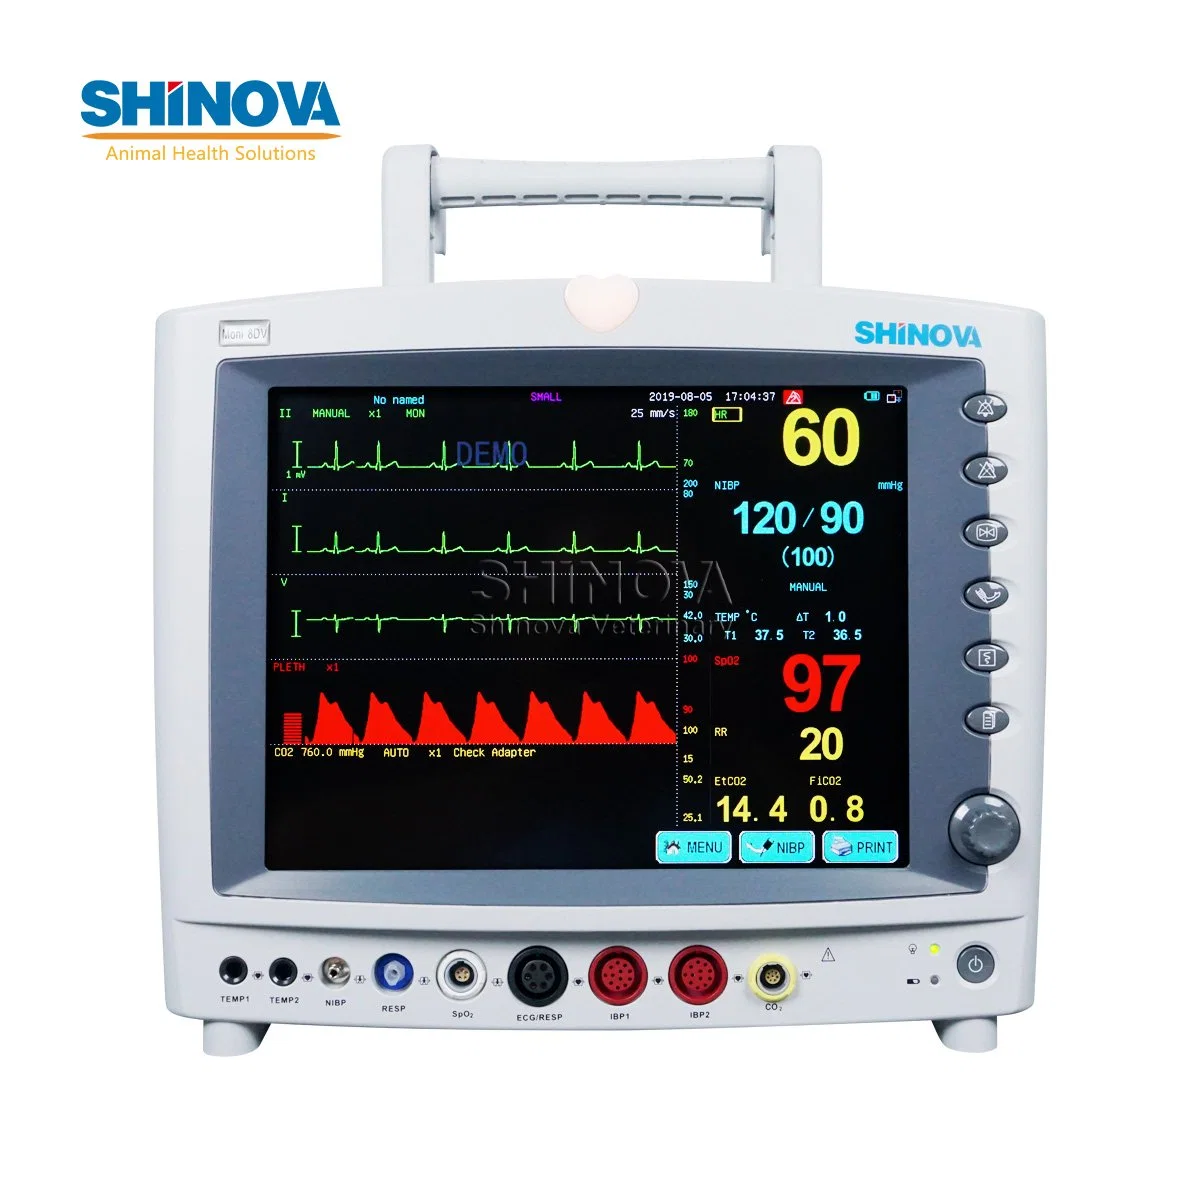 Shinova 12.1 Inch Touchscreen Multi-Parameter Veterinary Monitor with Etco2 for Veterinary Hospital Use